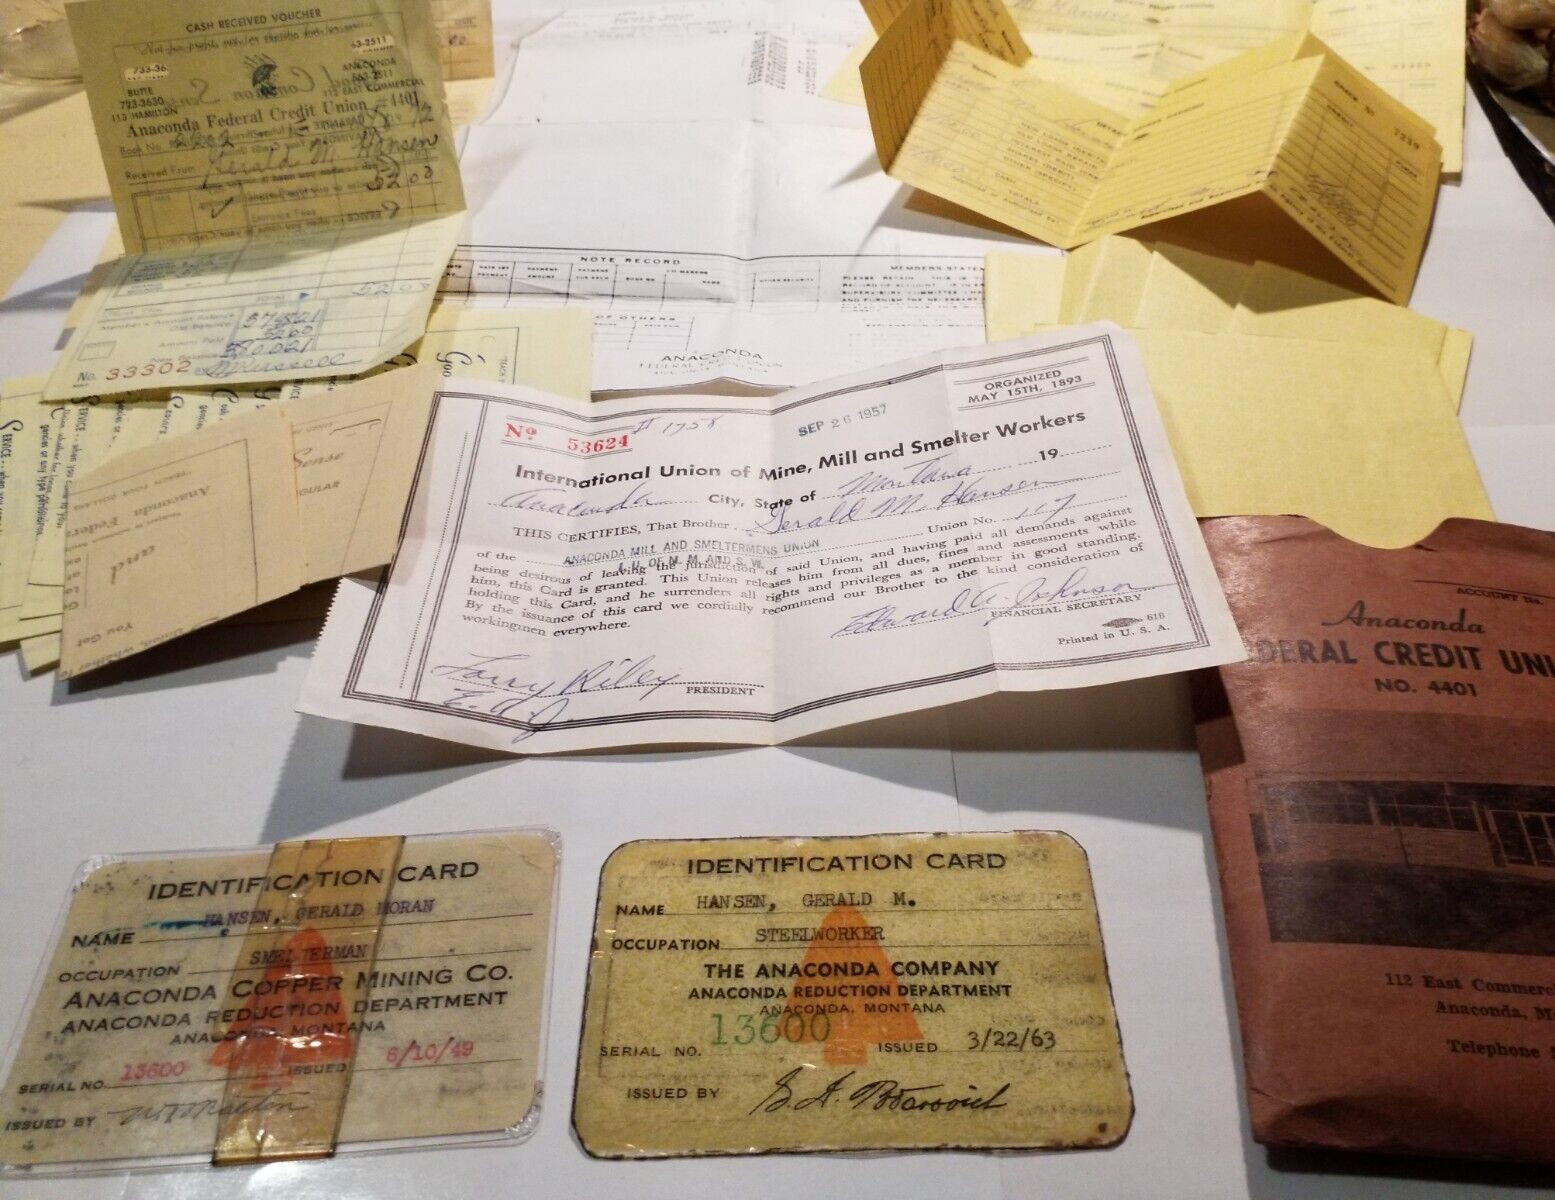 Anaconda Copper Mining Co Employee IDs 1949-63 Documents Union Mine Smelter Bank